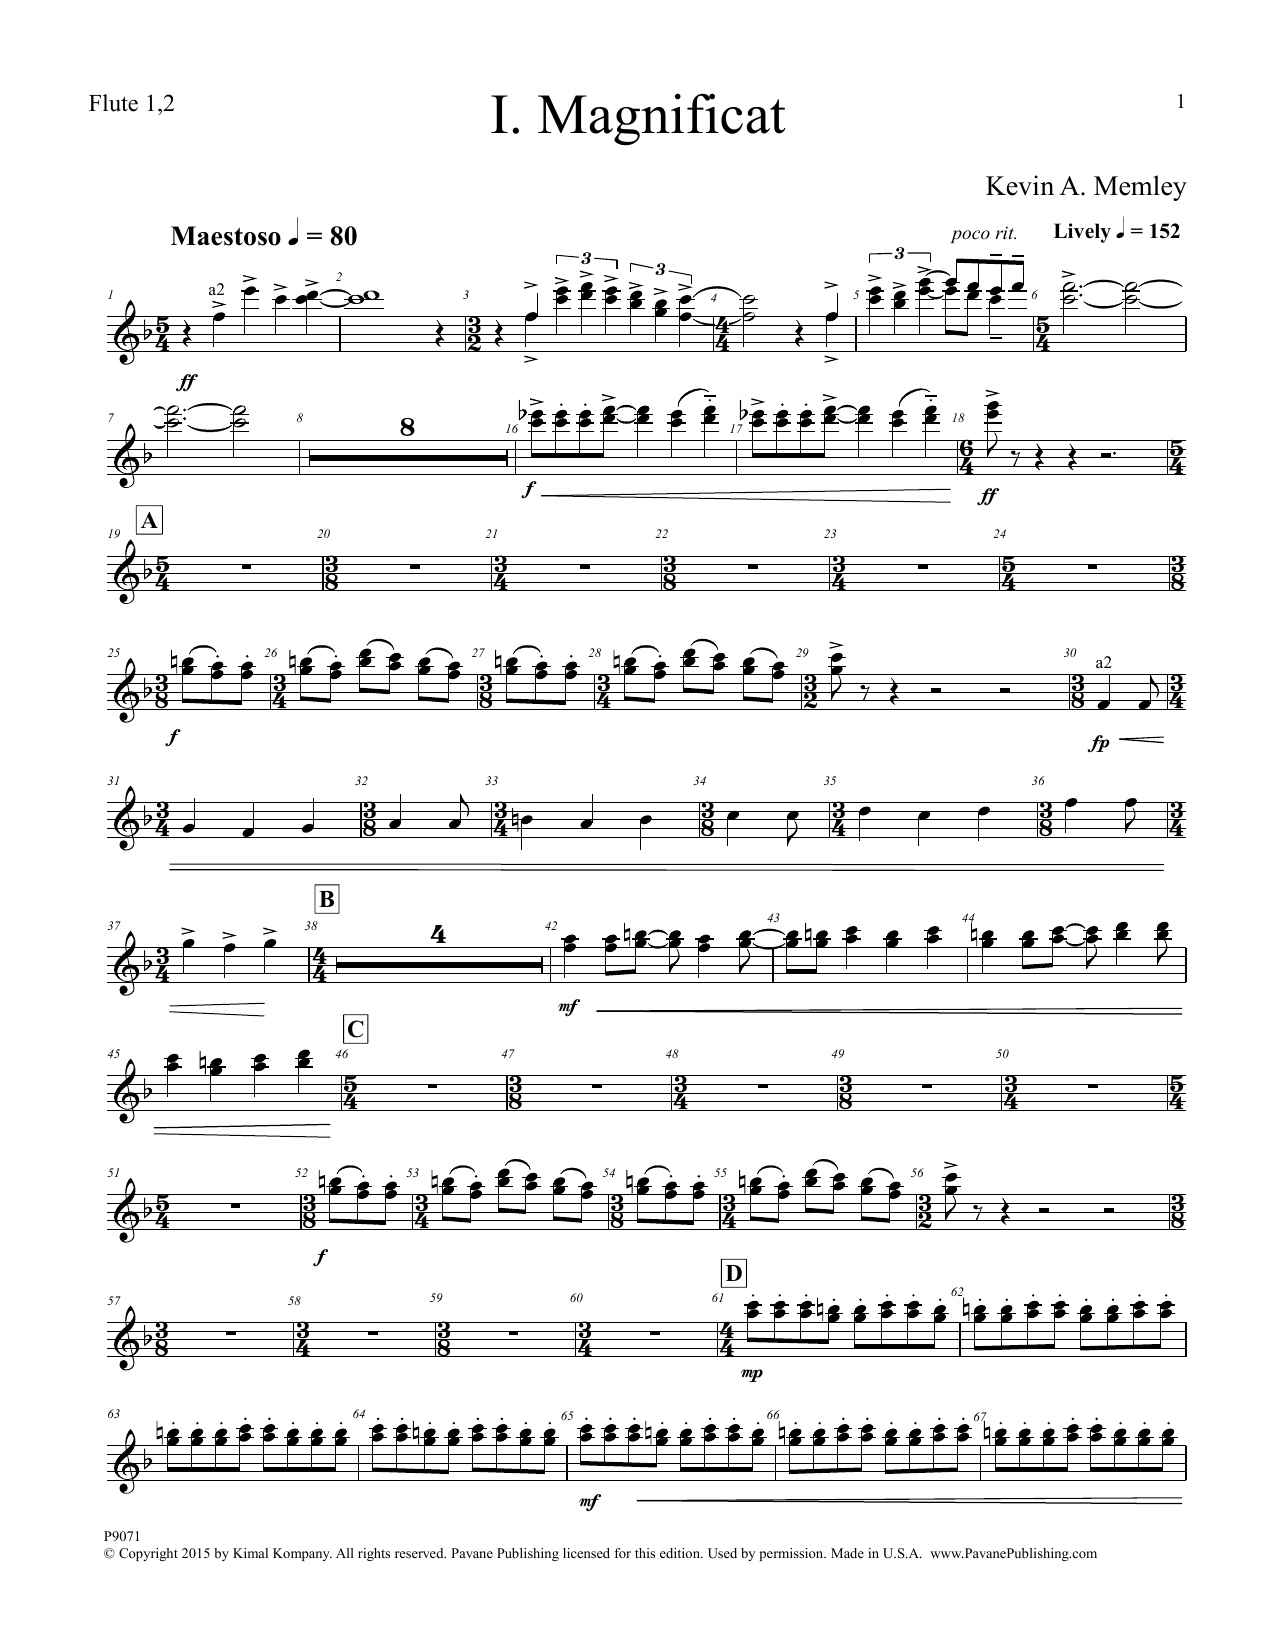 Download Kevin A. Memley Magnificat - Flute 1,2 Sheet Music